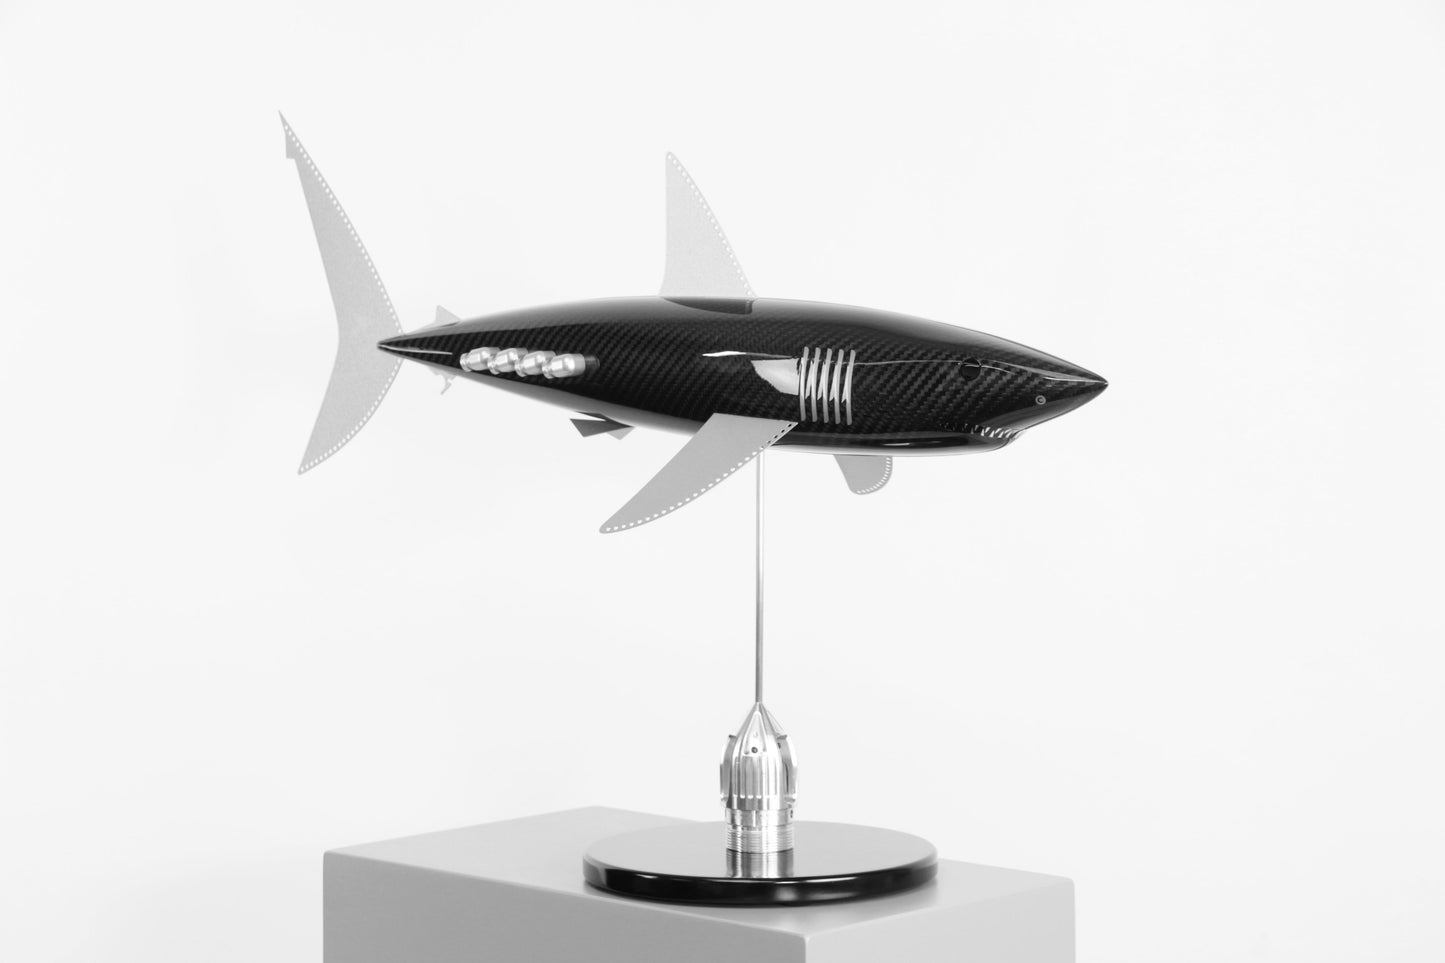 Carbon fibre Mako Shark sculpture on a black base with F1 parts